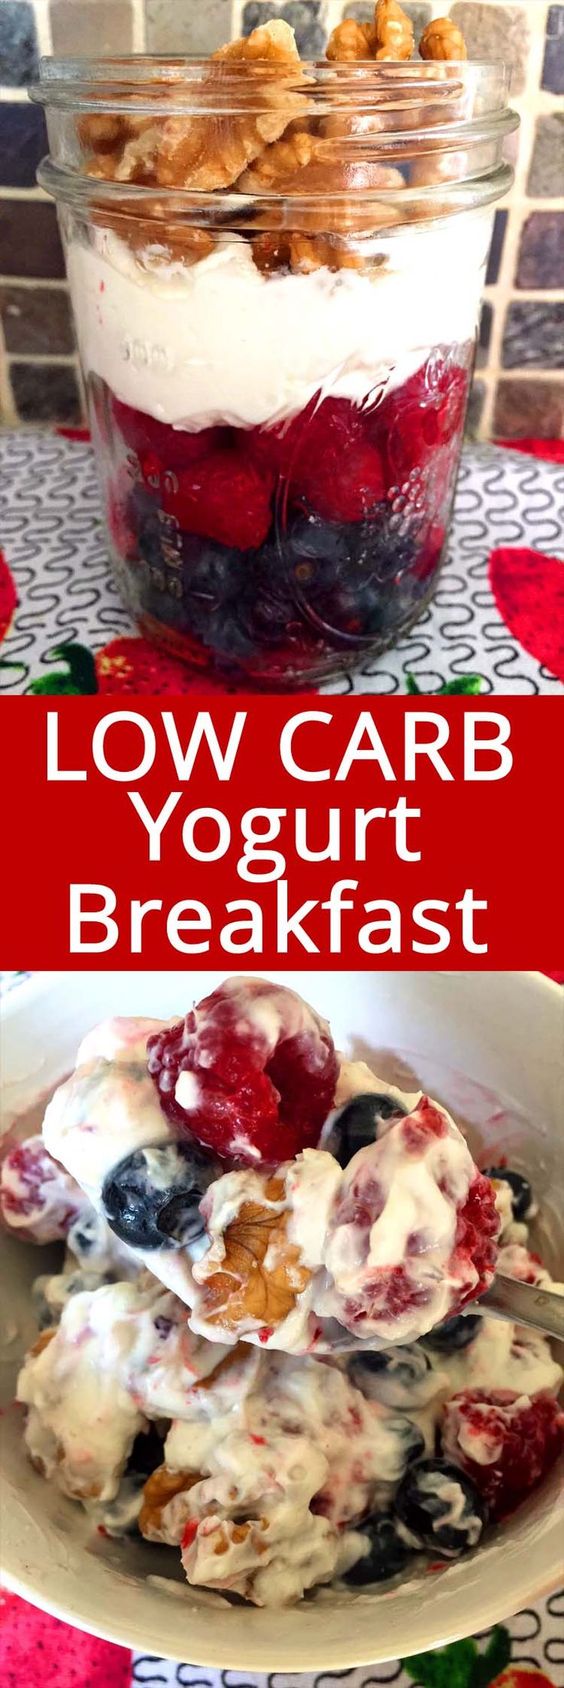 low carb yogurt breakfast